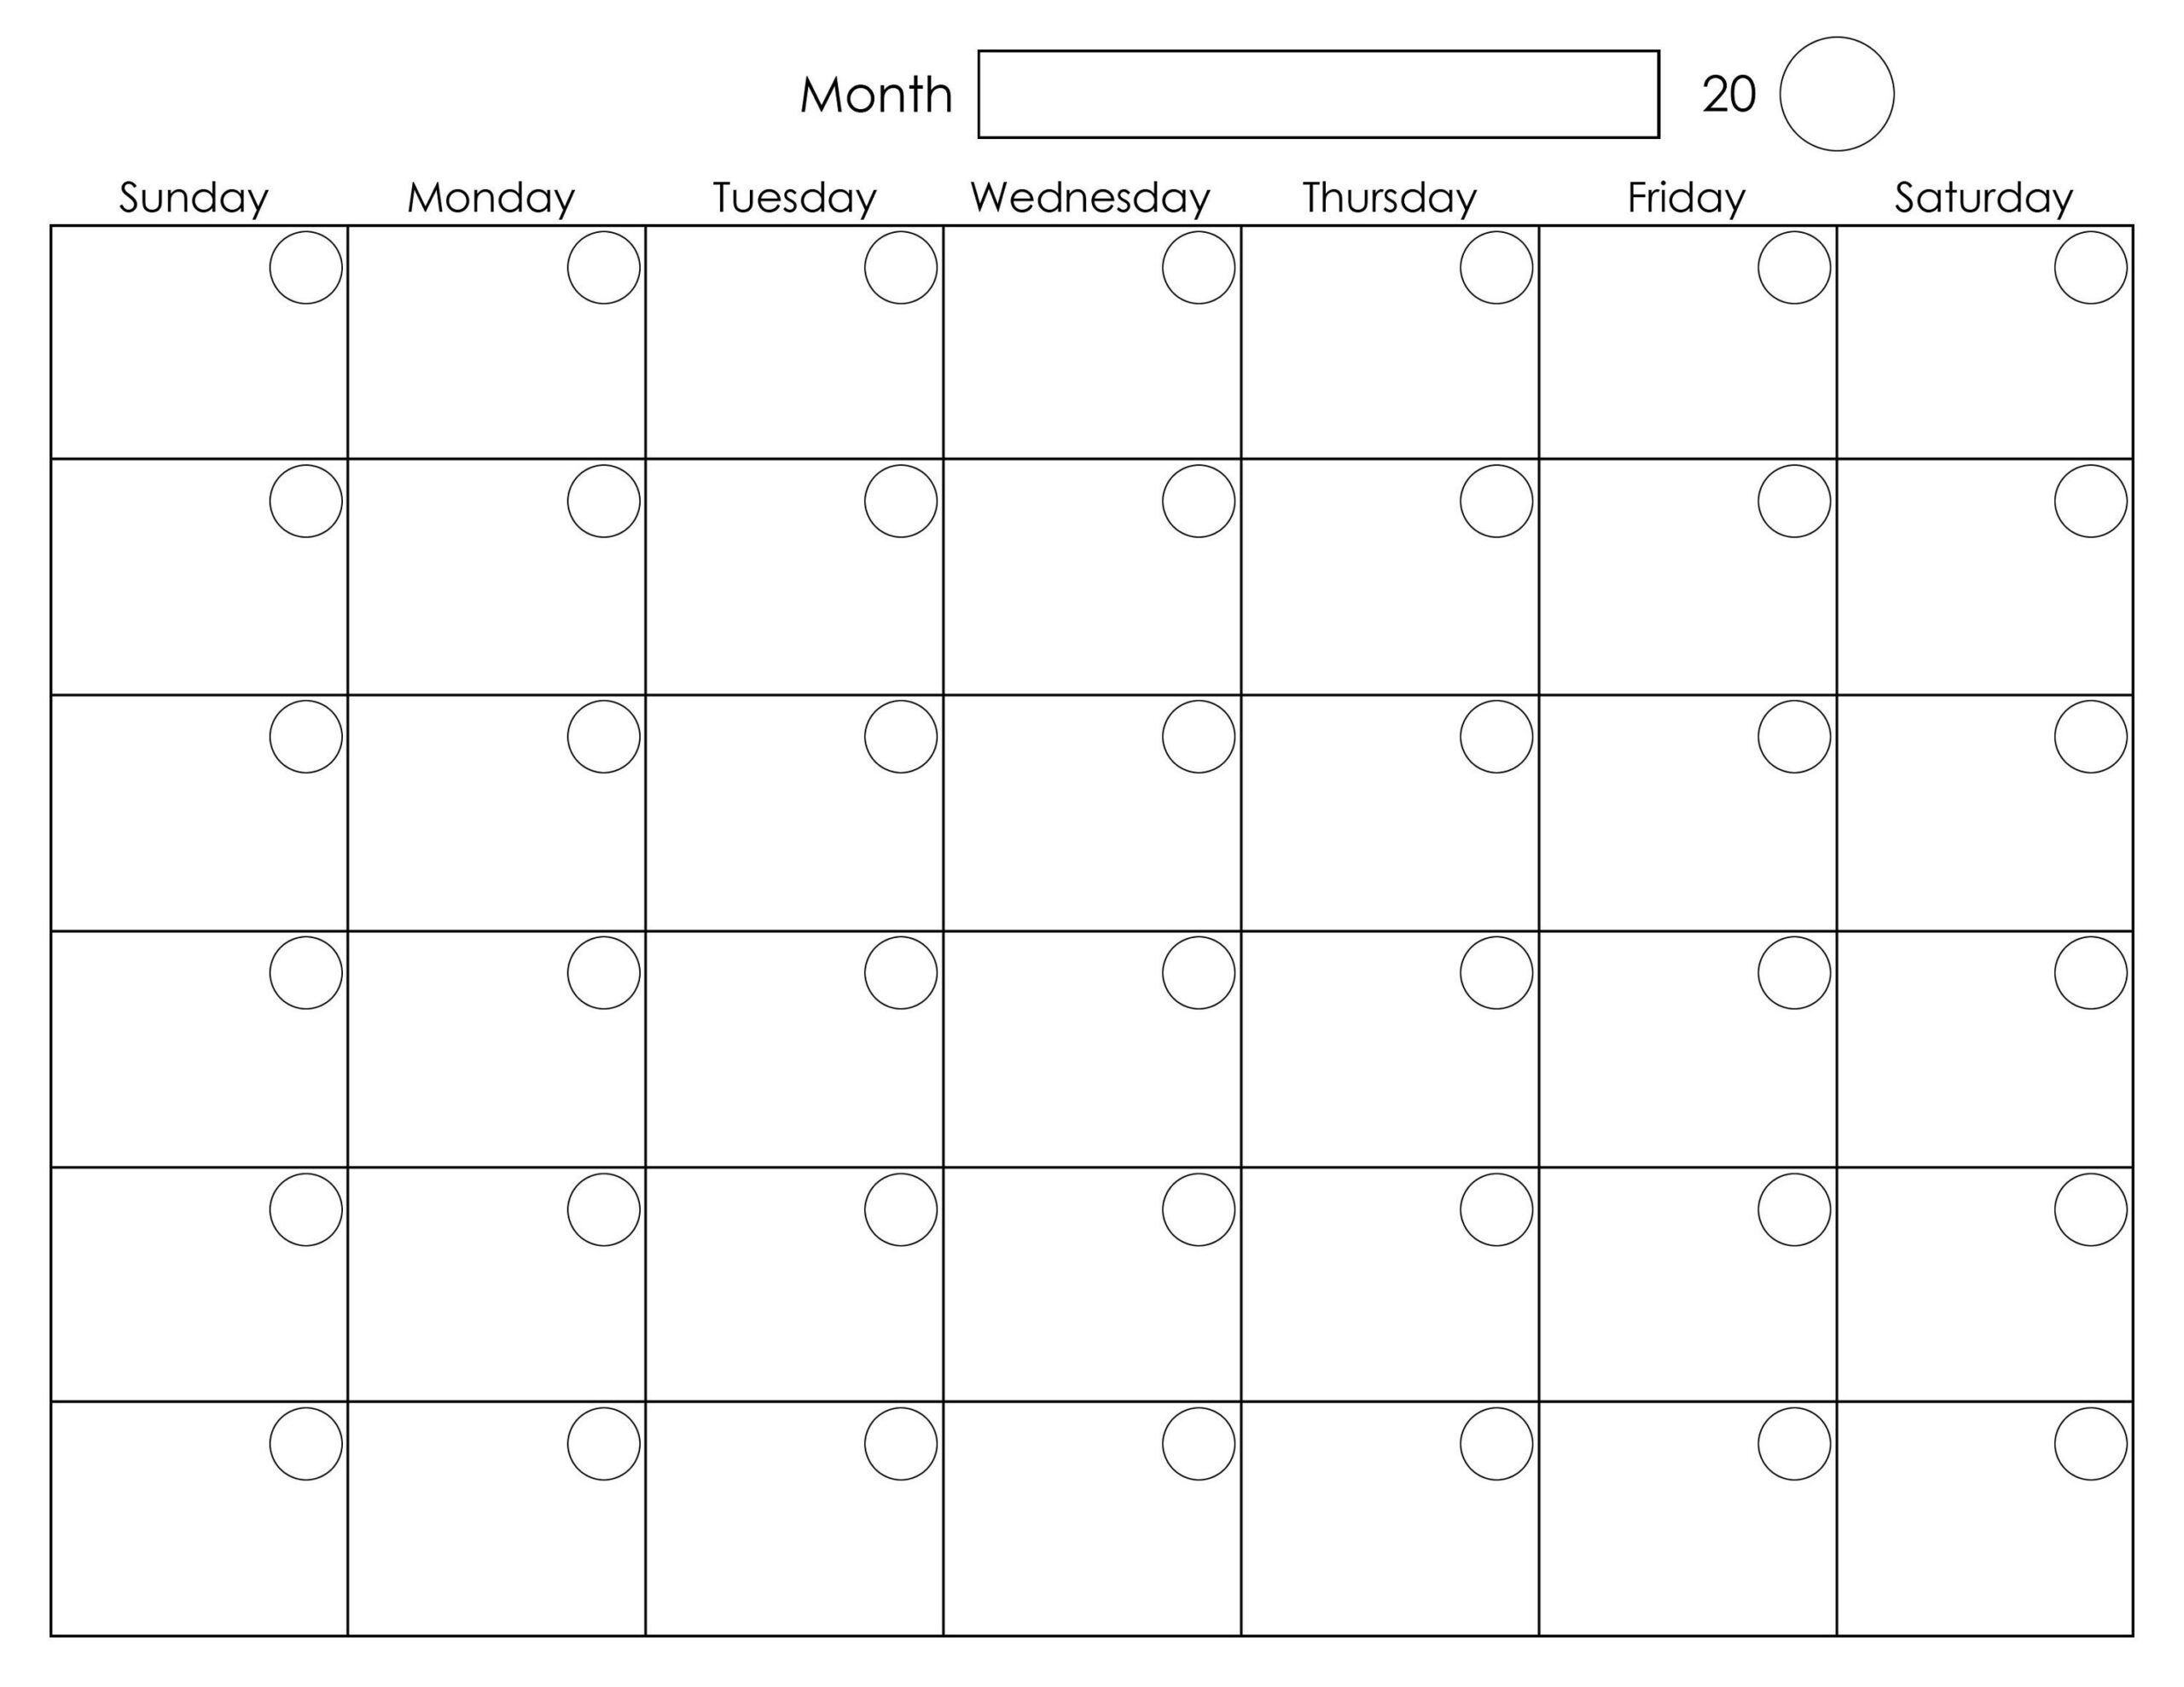 December 2018  Template Calendar Design intended for Calendar To Fill In